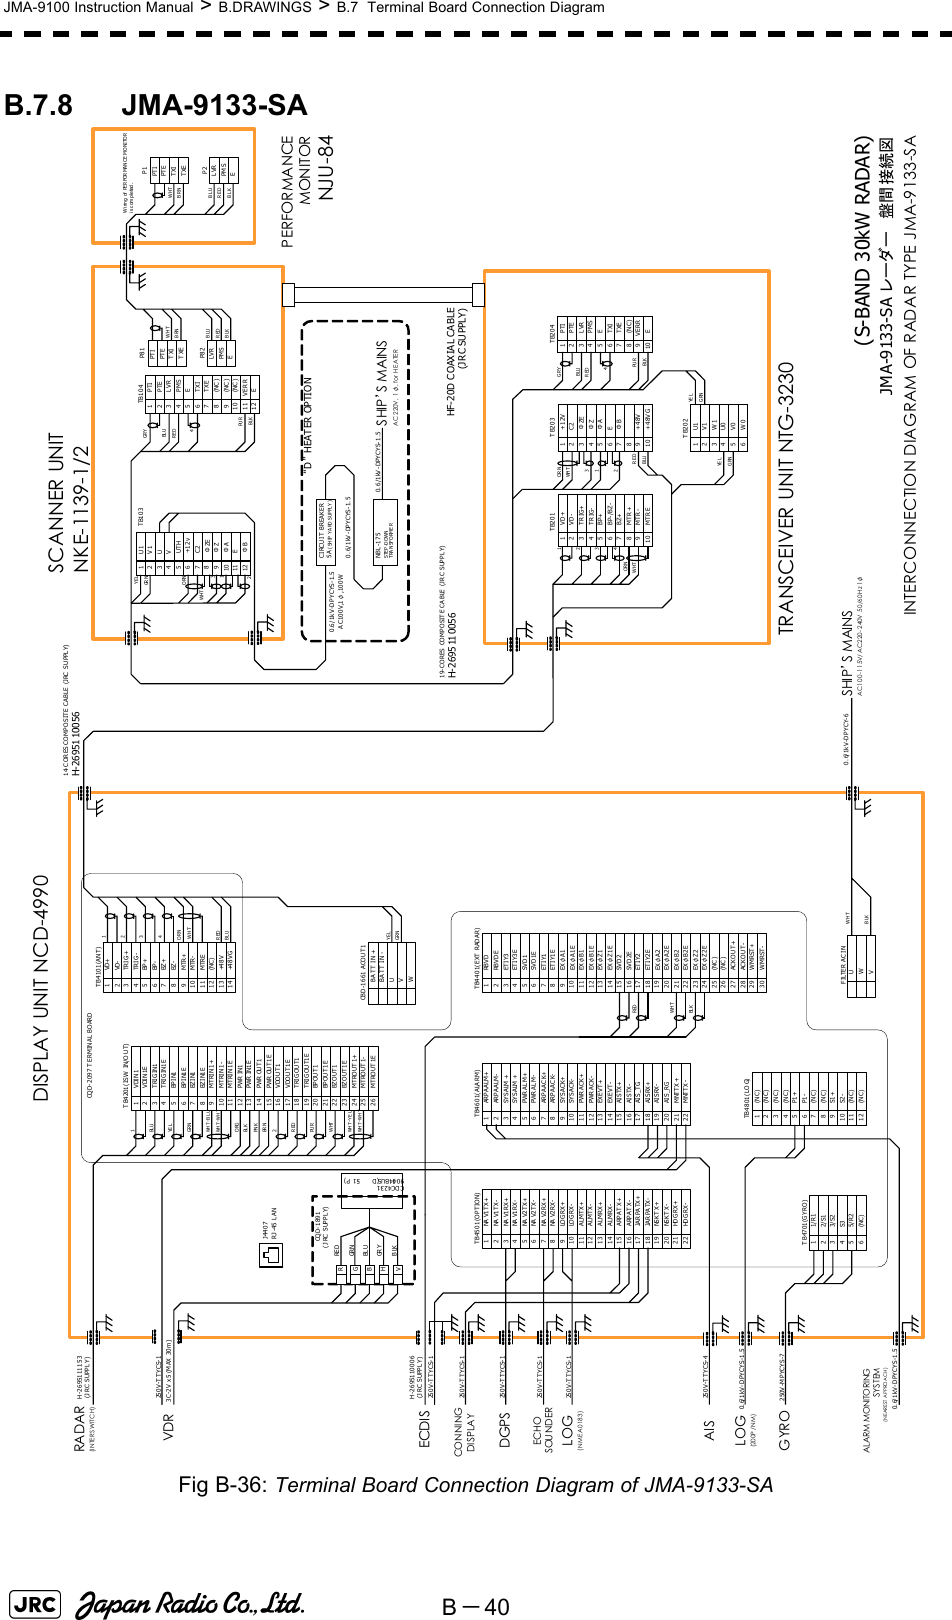 B－40JMA-9100 Instruction Manual &gt; B.DRAWINGS &gt; B.7  Terminal Board Connection DiagramB.7.8 JMA-9133-SAFig B-36: Terminal Board Connection Diagram of JMA-9133-SA 1VD+2VD-3TRIG+4TRIG-5BP+6BP-7BZ+8BZ-9MTR+10 MTR-11 MTRE12 (NC)13 +4 8 V14 +4 8 V GTB4101(ANT)1NA V 1 T X+2NA V 1 T X-3NA V 1 RX +4NA V 1 RX -5NA V 2 T X+6NA V 2 T X-7NA V 2 RX +8NA V 2 RX -9LO G R X+10 LO G R X-11 ALMTX+12 ALMTX-13 ALMRX+14 ALMRX-15 ARPAT X+16 ARPAT X-17 JAR PA TX+18 JAR PA TX-19 NSKT X +20 NSKT X -21 HD G RX +22 HD G RX -TB4501(OPTION)1ARPAAL M+2ARPAAL M-3SYSALM +4SYSALM +5PWR ALM+6PWR ALM-7ARPAAC K+8ARPAAC K-9SYSACK+10 SYSACK-11 PWR ACK+12 PWR ACK-13 EXEVT+14 EXEVT-15 AISTX+16 AISTX-17 AIS_ TG18 AISRX+19 AISRX-20 AIS_ RG21 MNTTX +22 MNTTX -TB4601(ALA RM) TB4401(EXT RAD AR)1RBVD2RBVD E3ETIY34ETIY3E5SVD16SVD1E7ETIY18ETIY1E9EXφA110 EXφA1E11 EXφB112 EXφB1E13 EXφZ114 EXφZ1E1516171819202122232425 (NC )26 (NC )27 ACKO U T+28 ACKO U T-29 WMRST+30 WMRST-SVD2SVD2EETIY2ETIY2EEXφA2EXφA2EEXφB2EXφB2EEXφZ2EXφZ2E1(NC)2345P1+6P1-789S1+10 S2-1112TB4801(LOG)(NC)(NC)(NC)(NC)(NC)(NC)(NC)UWVFILTER ACINCDC-1324J4409(DSUB-15P)RCQD-1891(JRC SUPPL Y)GBHVREDGRNBLUGR YBLK11/R122/S133/S24S355/R26(NC)TB4701(GYRO)PTIPTETXITXELVRPMSEP82P81PTIPTETXITXELVRPMSEP2P1SCANNER UNITNKE-1139-1/2PERFORMANCEMONITORNJU-84DISPLAY UNIT NCD-4990BLU1YE LGRNWHT-B LUWHT-WH TORGBLKPN KBR N2REDPU RWHT-YELWHT-WH TH-2695111153(J RC SUPPLY)1VDIN12VDIN1 E3TRIGIN14TRIGIN1E5BPIN16BPIN1E7BZIN18BZIN1E9MTRIN1+10 MTRIN1-11 MTRIN1E12 PWR IN113 PWR IN1E14 PWR OU T115 PWR OU T1E16 VDOU T117 VDOU T1E18 TRIG OU T119 TRIG OU T1E20 BPOUT121 BPOUT1 E22 BZOUT123 BZOUT1E24 MTROUT 1+25 MTROUT 1-26 MTROUT 1ET B4201(ISW IN/OUT)RADAR(INTERS WITC H)WHTREDWH TBLKECDISH-2695110006(J RC SUPPLY)250V-T TYCS-1250V-T TYCS-1CONNINGDISPLAYVDR3C-2V x 5 (MAX  30m )250V-T TYCS-1250V-T TYCS-1250V-T TYCS-1250V-T TYCS-1DGPSECHO SOUNDERLOG(NMEA0183)250V-T TYCS-4AIS0. 6/1k V-DPYCYS-1. 5250V -M PYCYS-7GYROLOG(200P /NM)0. 6/1k V-DPYCYS-1. 5ALARM MONITORI NGSYS T EM(NEAREST APPROACH)REDBLU3ORN WHT0.6/1kV-DPYCY-6SHIP’S MAINSAC100-115V/ AC220-240V 50/60Hz 1φ(S-BAND 30kW RADAR)JMA-9133-SA レーダー 盤間接続図INTERCONNECTION DIAGRAM OF RADAR TYPE JMA-9133-SAWHTBLKWHTBRNBLUREDBLKWHTBRNBLUREDBLK14-C OR ES COMPOSITE CABLE (JRC SU PPLY)H-26 951 100 56CQD-2097 T ERMINAL  BOARD124YELGRNCIRCU IT BREAKER5A ( SHIP  YA RD SU PPLY )0.6/1kV-DPYCYS-1.5A C100V,1φ,100WNBL - 1 7 5STEP -DO WN  TRA N S FO RME R0.6/1kV -DPYCYS-1.50.6/1kV -DPYCYS-1.5SHIP’S MAINSAC 220V , 1φ,for HEATER“D” HEATER OPTIONPTIPTELVRPMS(NC )ETB104TXITXE123456789101ΦB23C24ΦZE5U16V17UTH8+12v9ΦZ10 ΦAETB103123V04W05U16V1W1U0TB2021GRNYE LHF-20D COAXIAL CABLE(J RC SU PPLY )19-CORES COMPOSIT E CA BLE (JR C SUPPLY)H-2 695 11 005 61MTR E23BP+4BP-/BZ-5VD+6VD-7TR IG+8TR IG-9BZ+10MTR +MTR -TB201123ΦA4E5+12V6C27ΦZE8ΦZ9ΦB10+48V+48V GTB20312345678910TB204PTIPTELVRPMS(NC)ETXITXEEVERR23GRNYE LREDBLU4ORNWHTORNWH T3124GRYBLUREDTRANSCEIVER UNIT NTG-32304GRYBLURED213WH TORNYE LGR NW iring  of  PERFOR MAN CE MONITORis completed .E1112VER R(NC )(NC )UV1112PU RBLKPU RBLKJ44 07RJ - 45 L ANUVWCBD -1661 ACO U T1BA TT IN -BA TT IN +